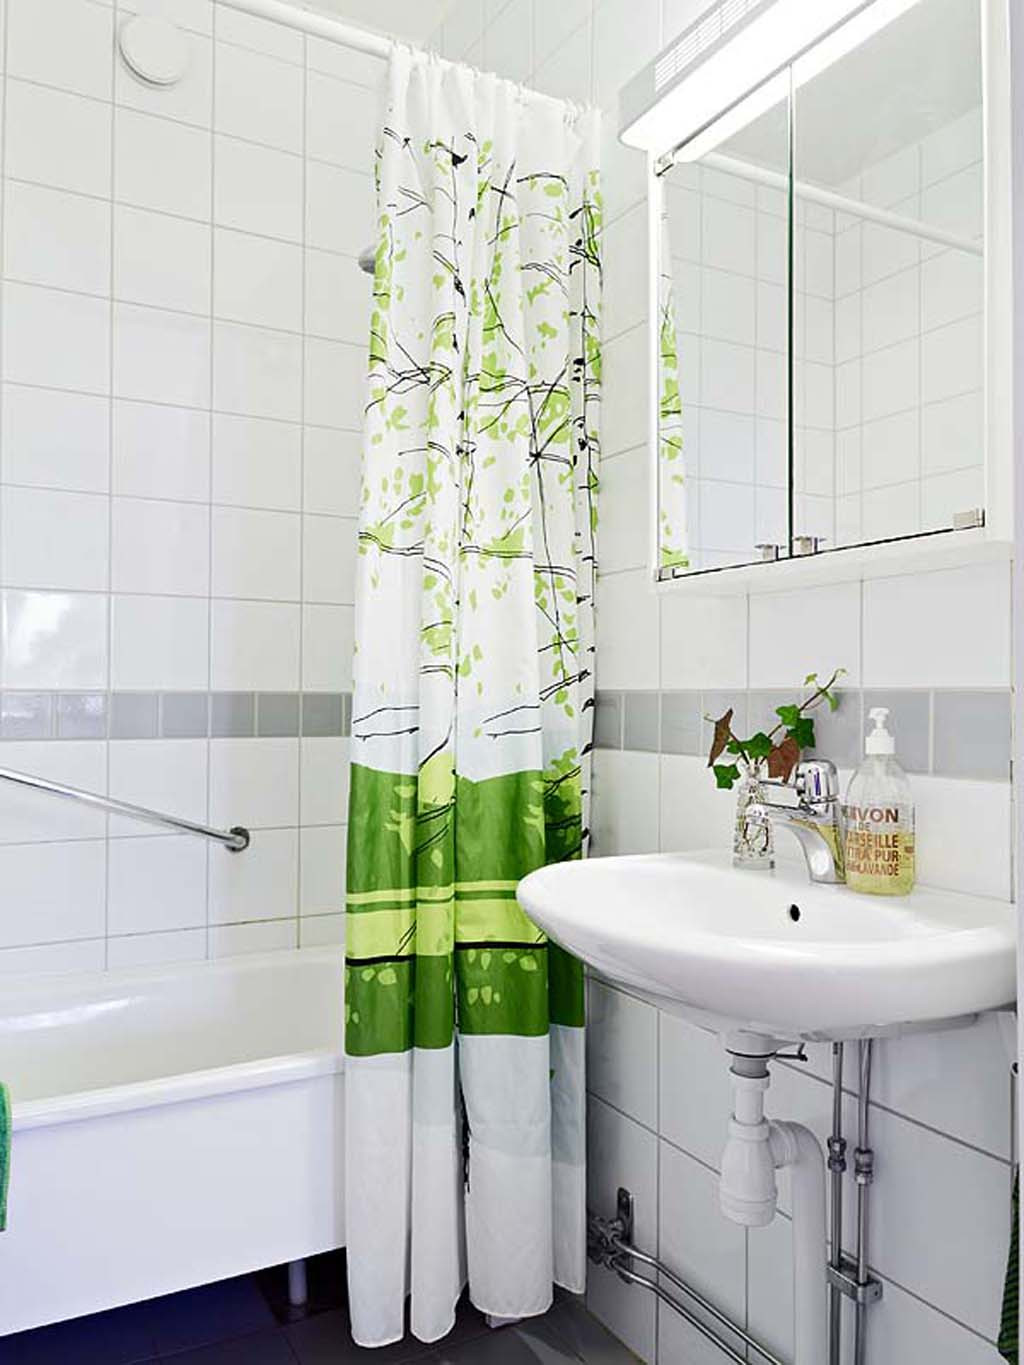 Apartment Bathroom Decor
 Modern Minimalist Apartment Bathroom Interior Design with